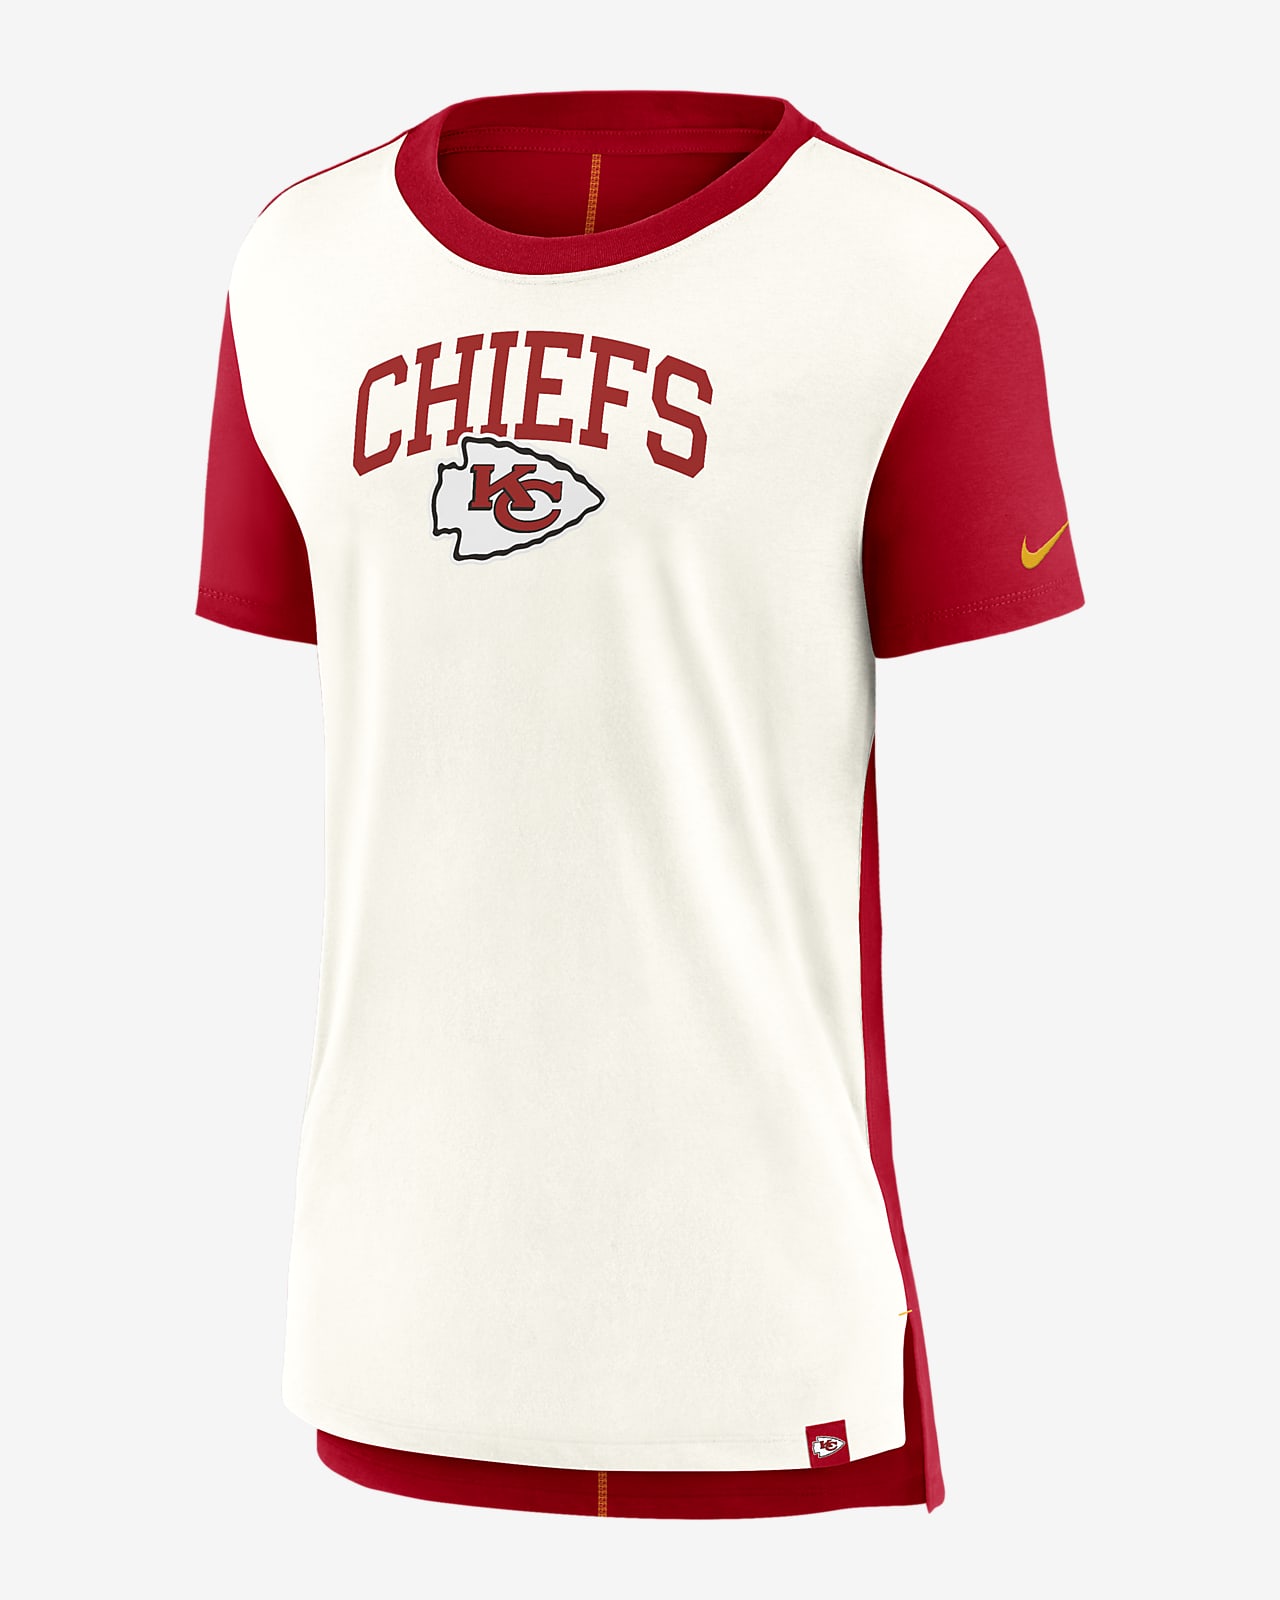 Kansas City Chiefs Women's Nike NFL T-Shirt